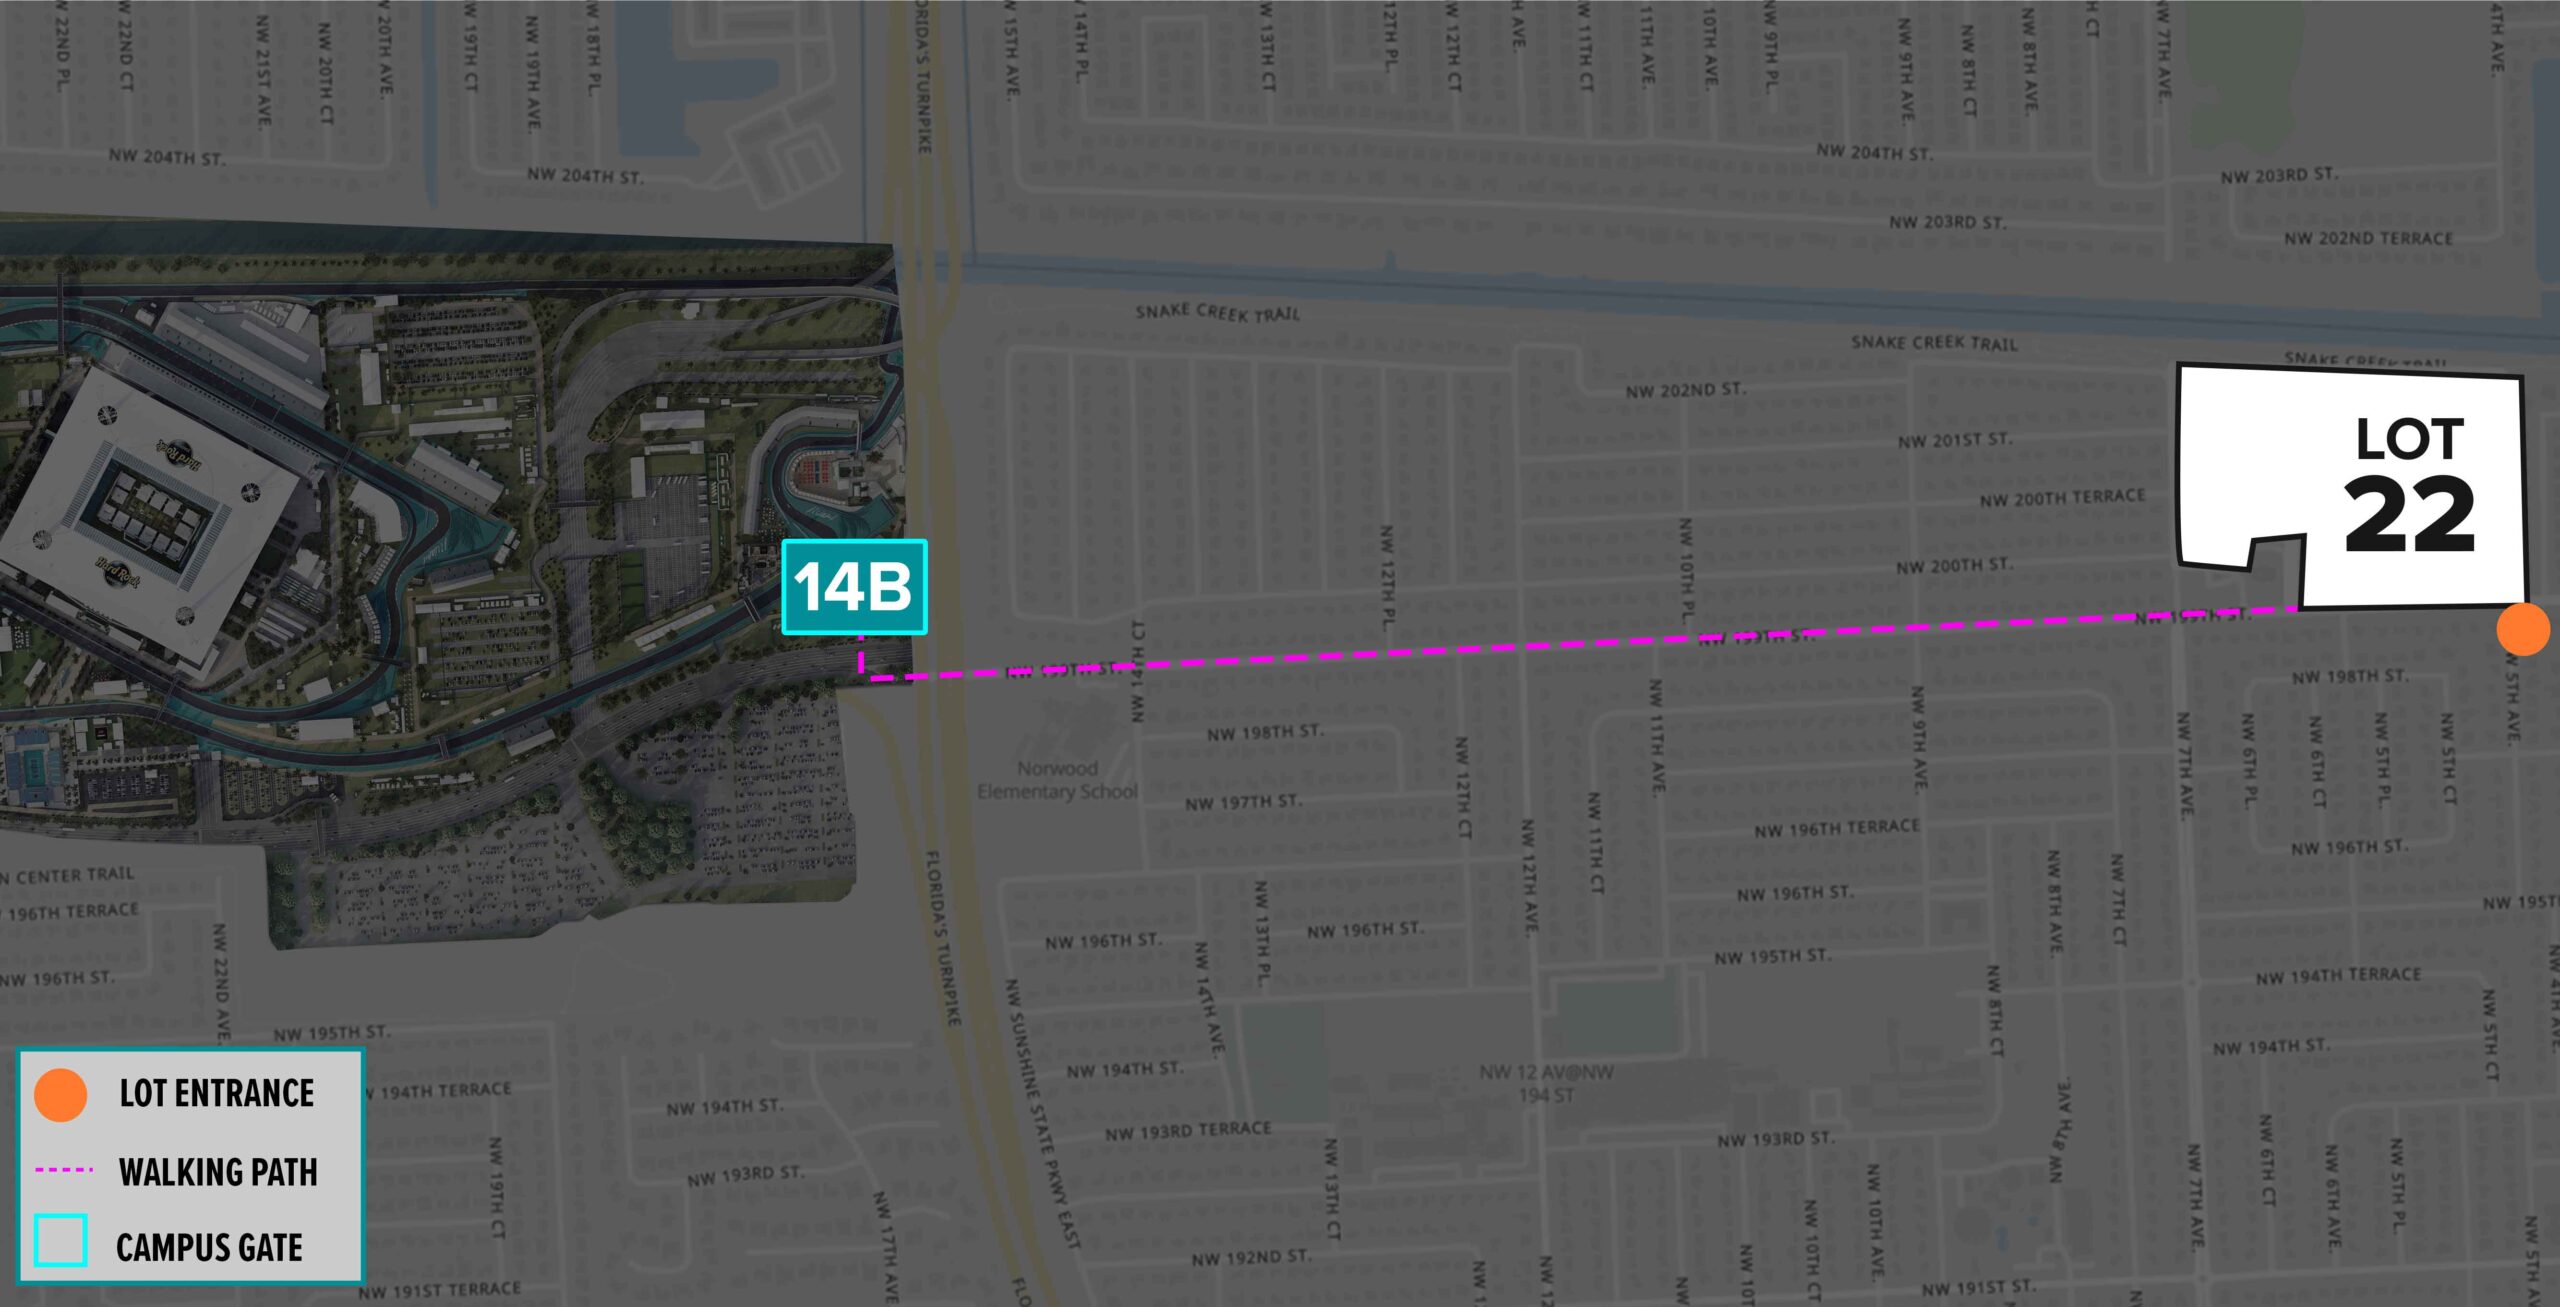 Parking Lot Location Map for Blue Lot 2 at the Formula 1 Crypto.com Miami Grand Prix